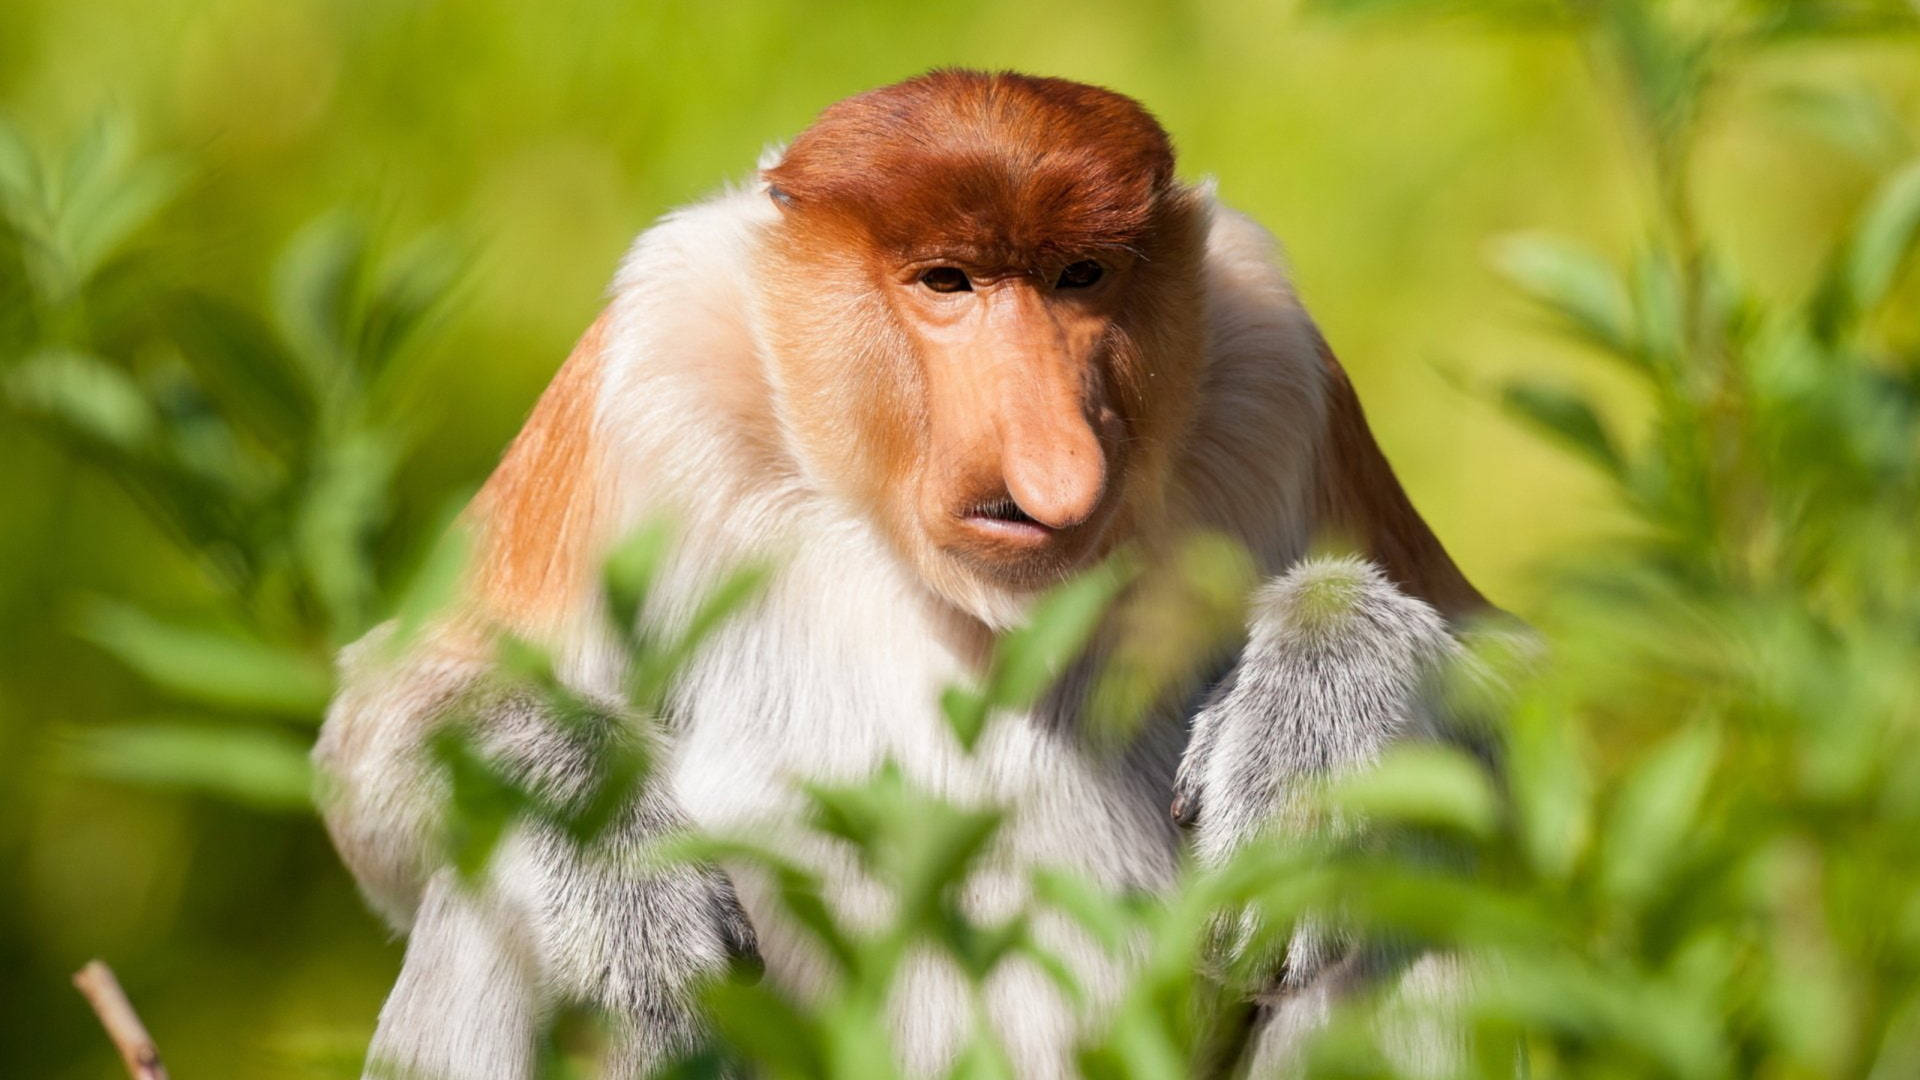 Majestic Proboscis Monkey in its Natural Habitat Wallpaper